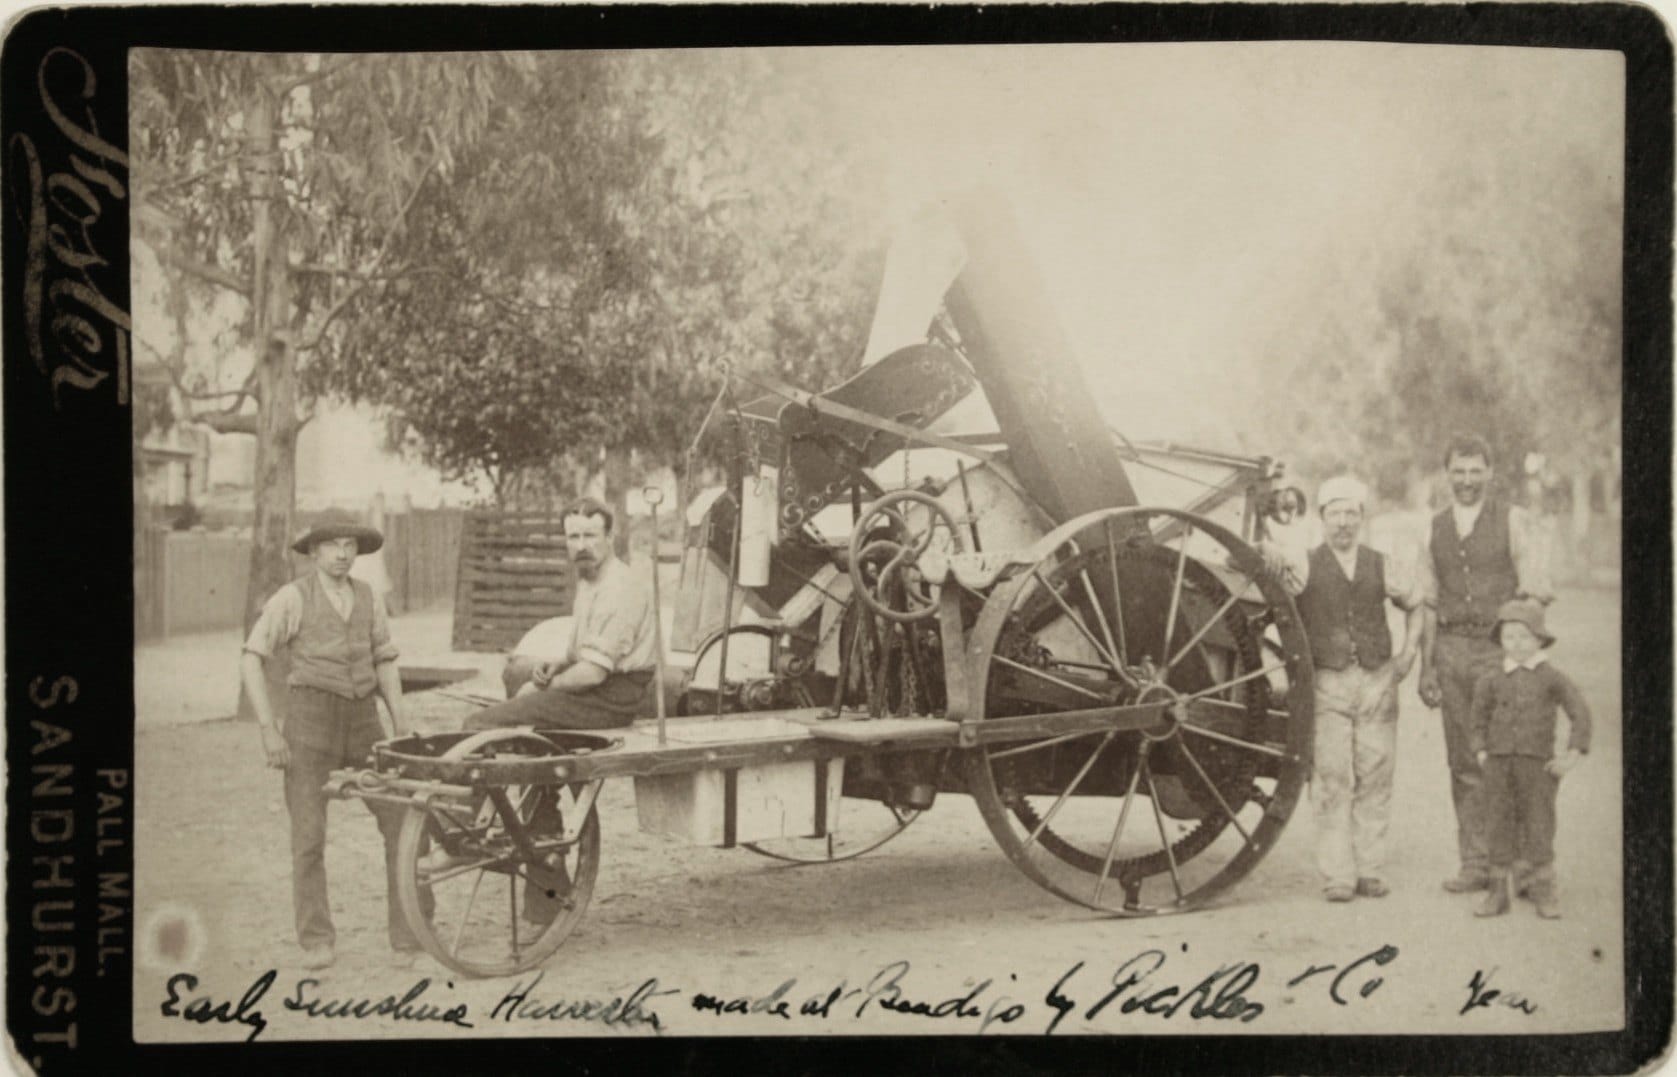 Early Sunshine Header Harvester, circa 1890